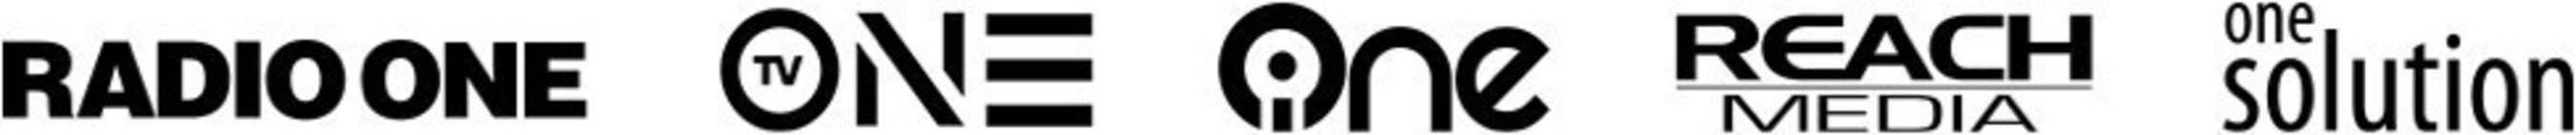 Radio_One___media_logos